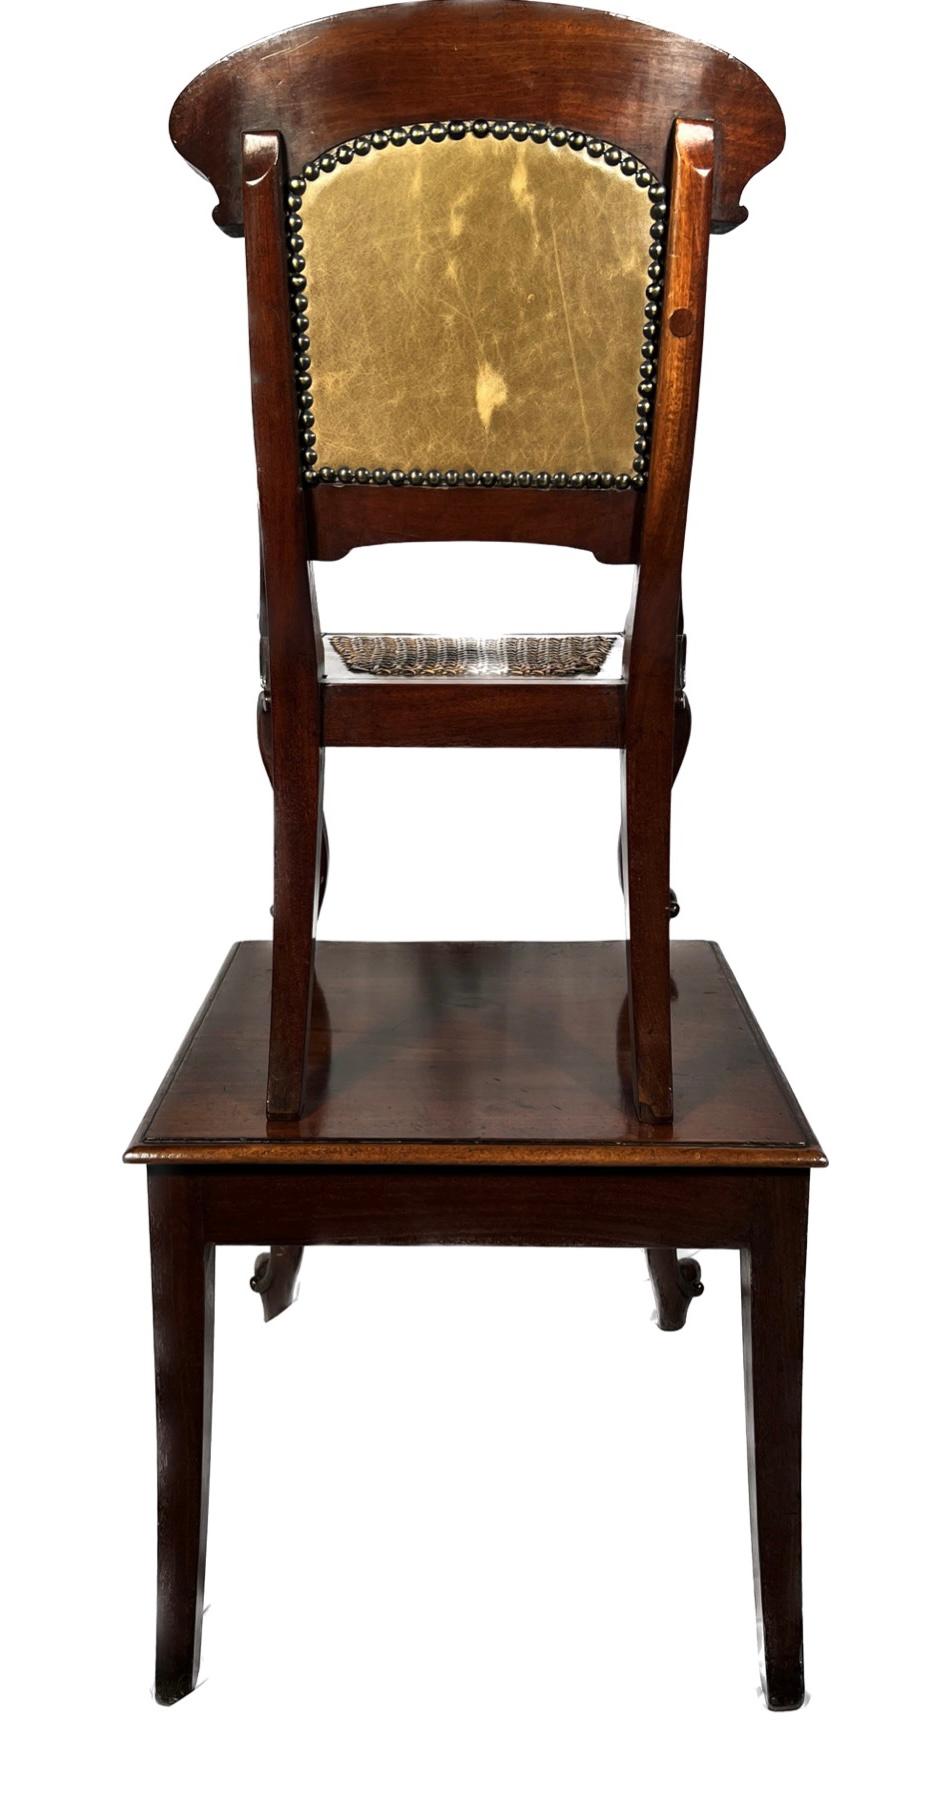 19th Century Antique English Victorian Child's Chair circa 1860 For Sale